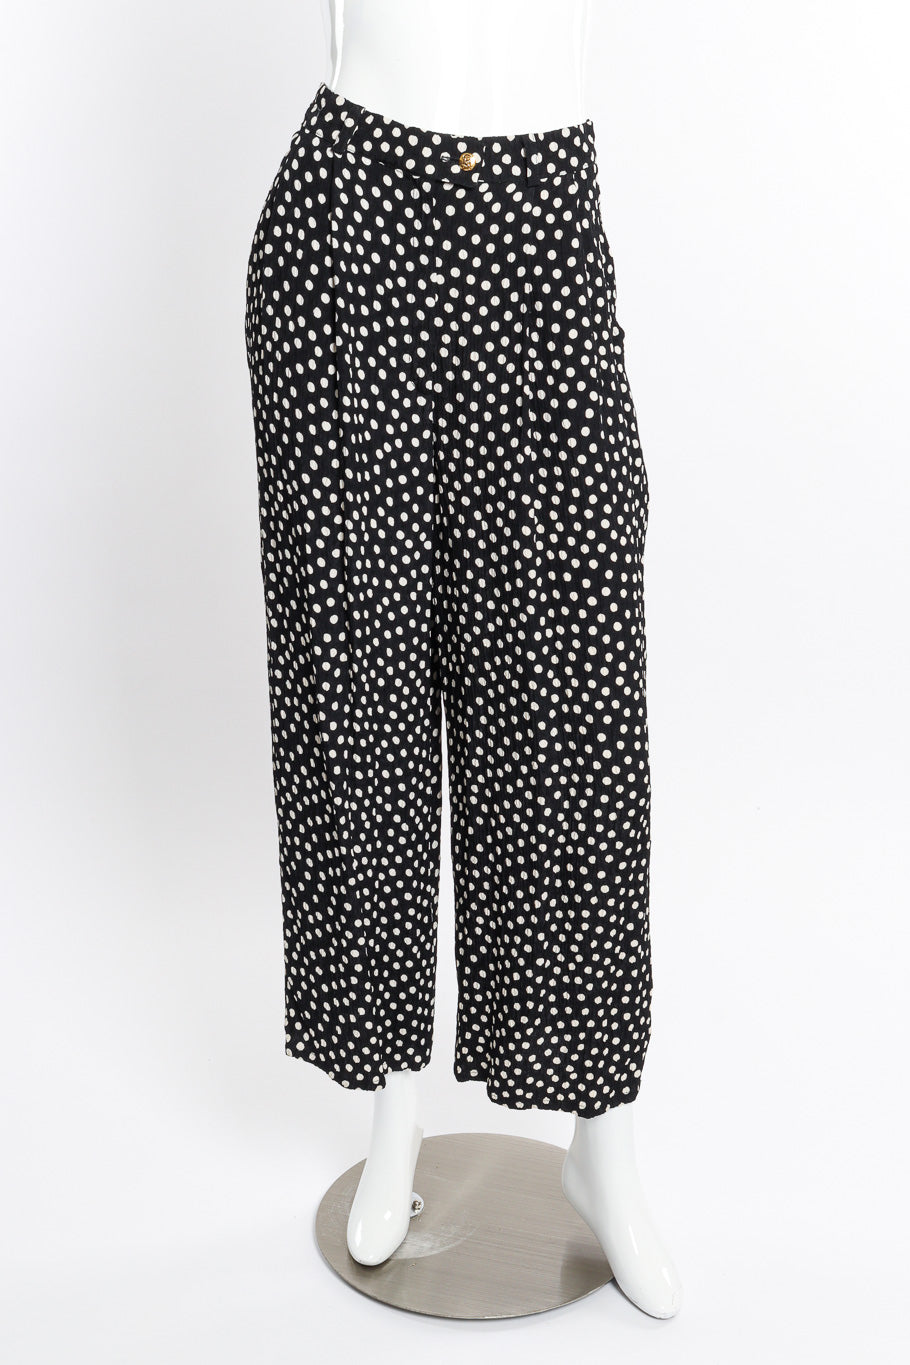 Vintage Sonia Rykiel Polka Dot Jacket and Skirt Set pant front on mannequin @recessla